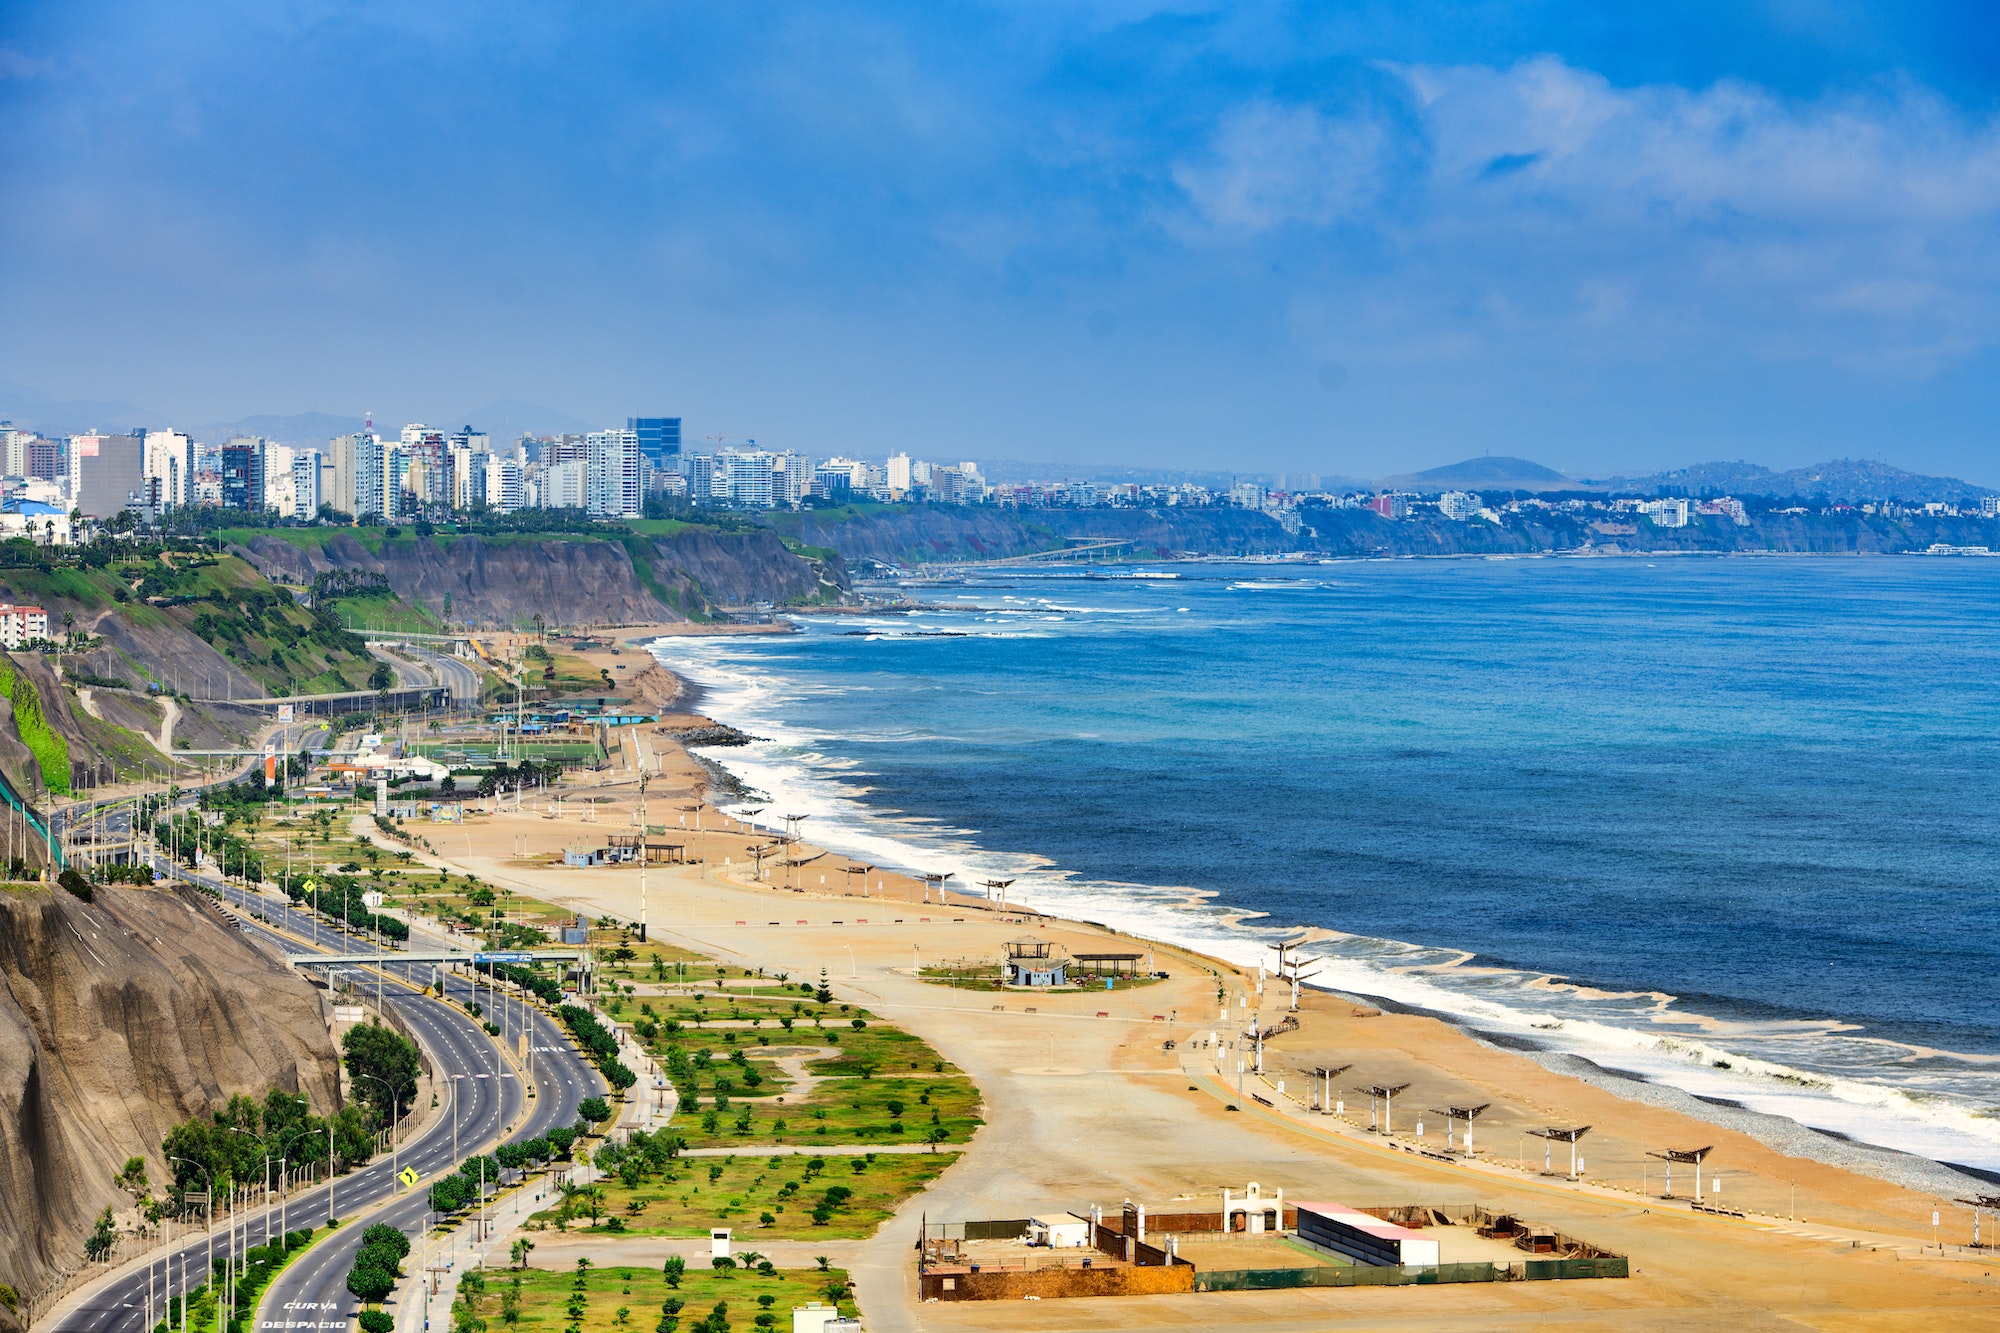 The Pacific Ocean coast of Lima Peru